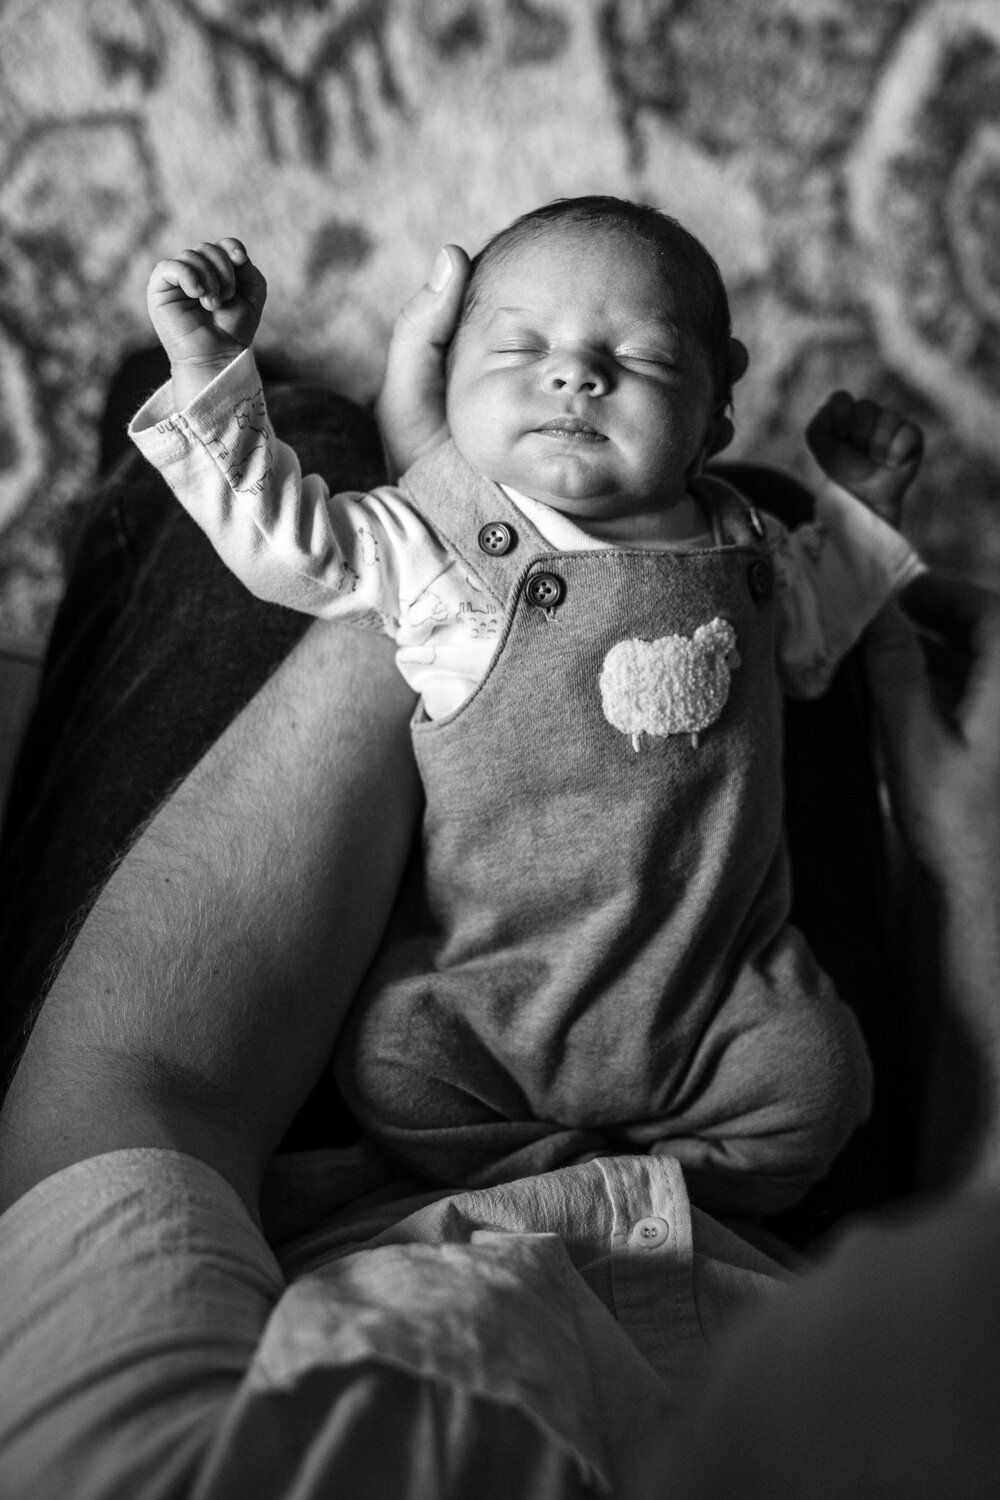 Dana-Jacobs-Photography-Finnegan-newborn-photography-session-st-louis-Web-no-watermark14-1462.JPG